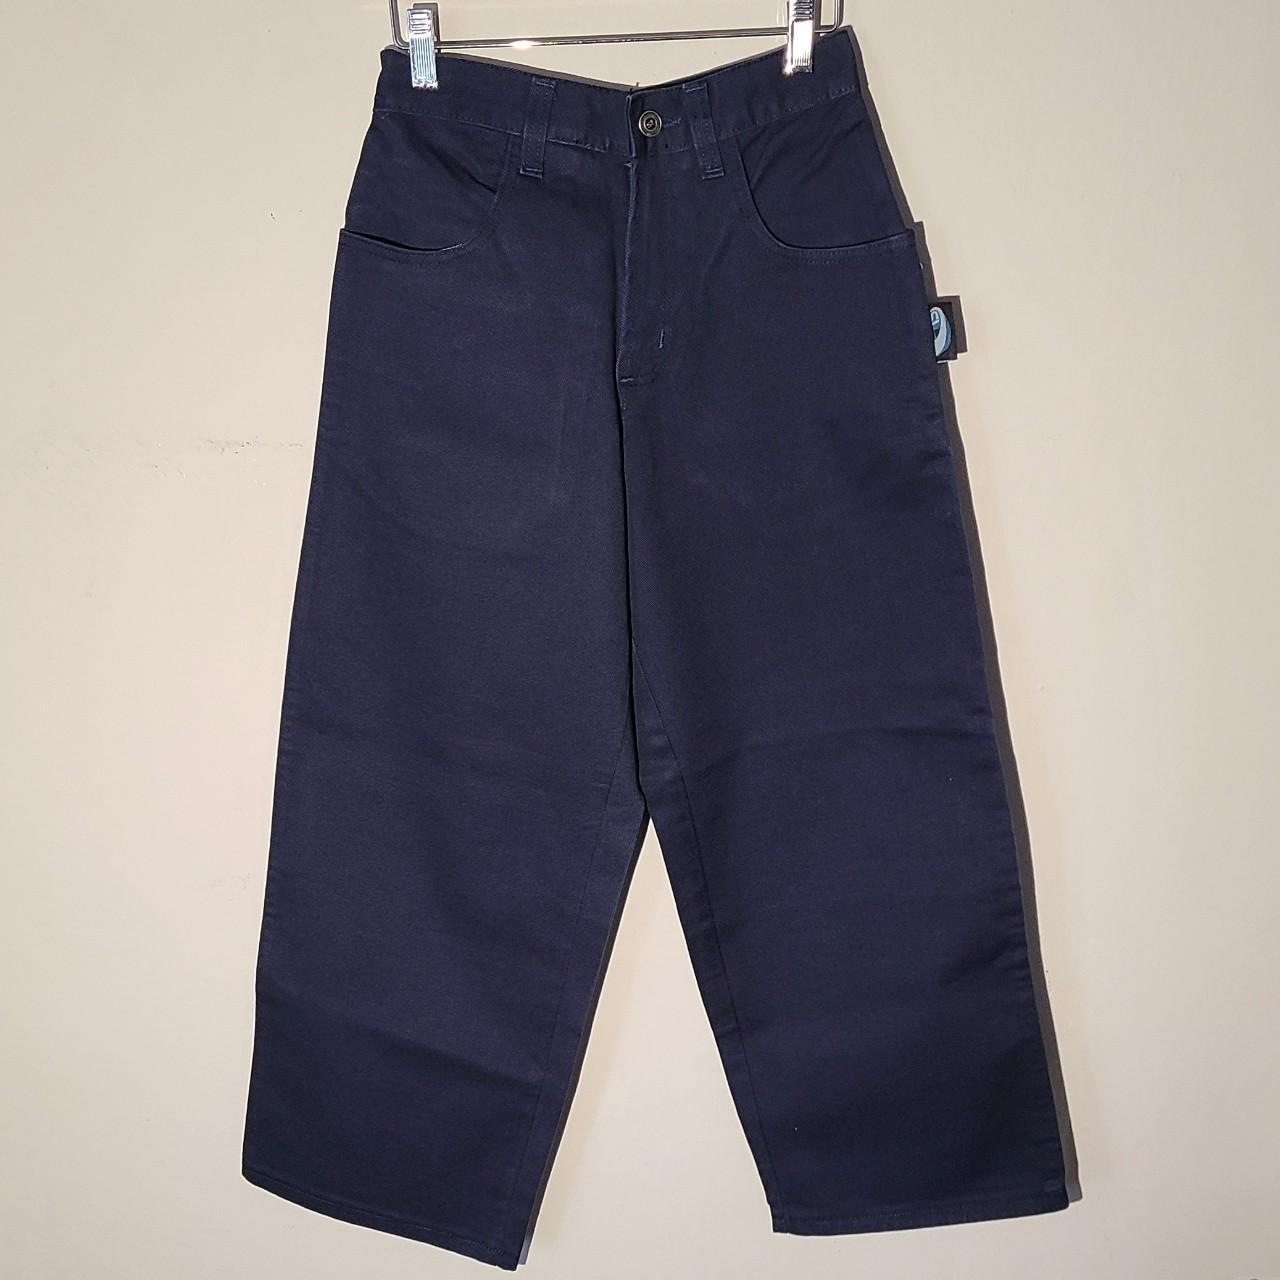 (NEW) Vintage Interstate Pants Made in... - Depop